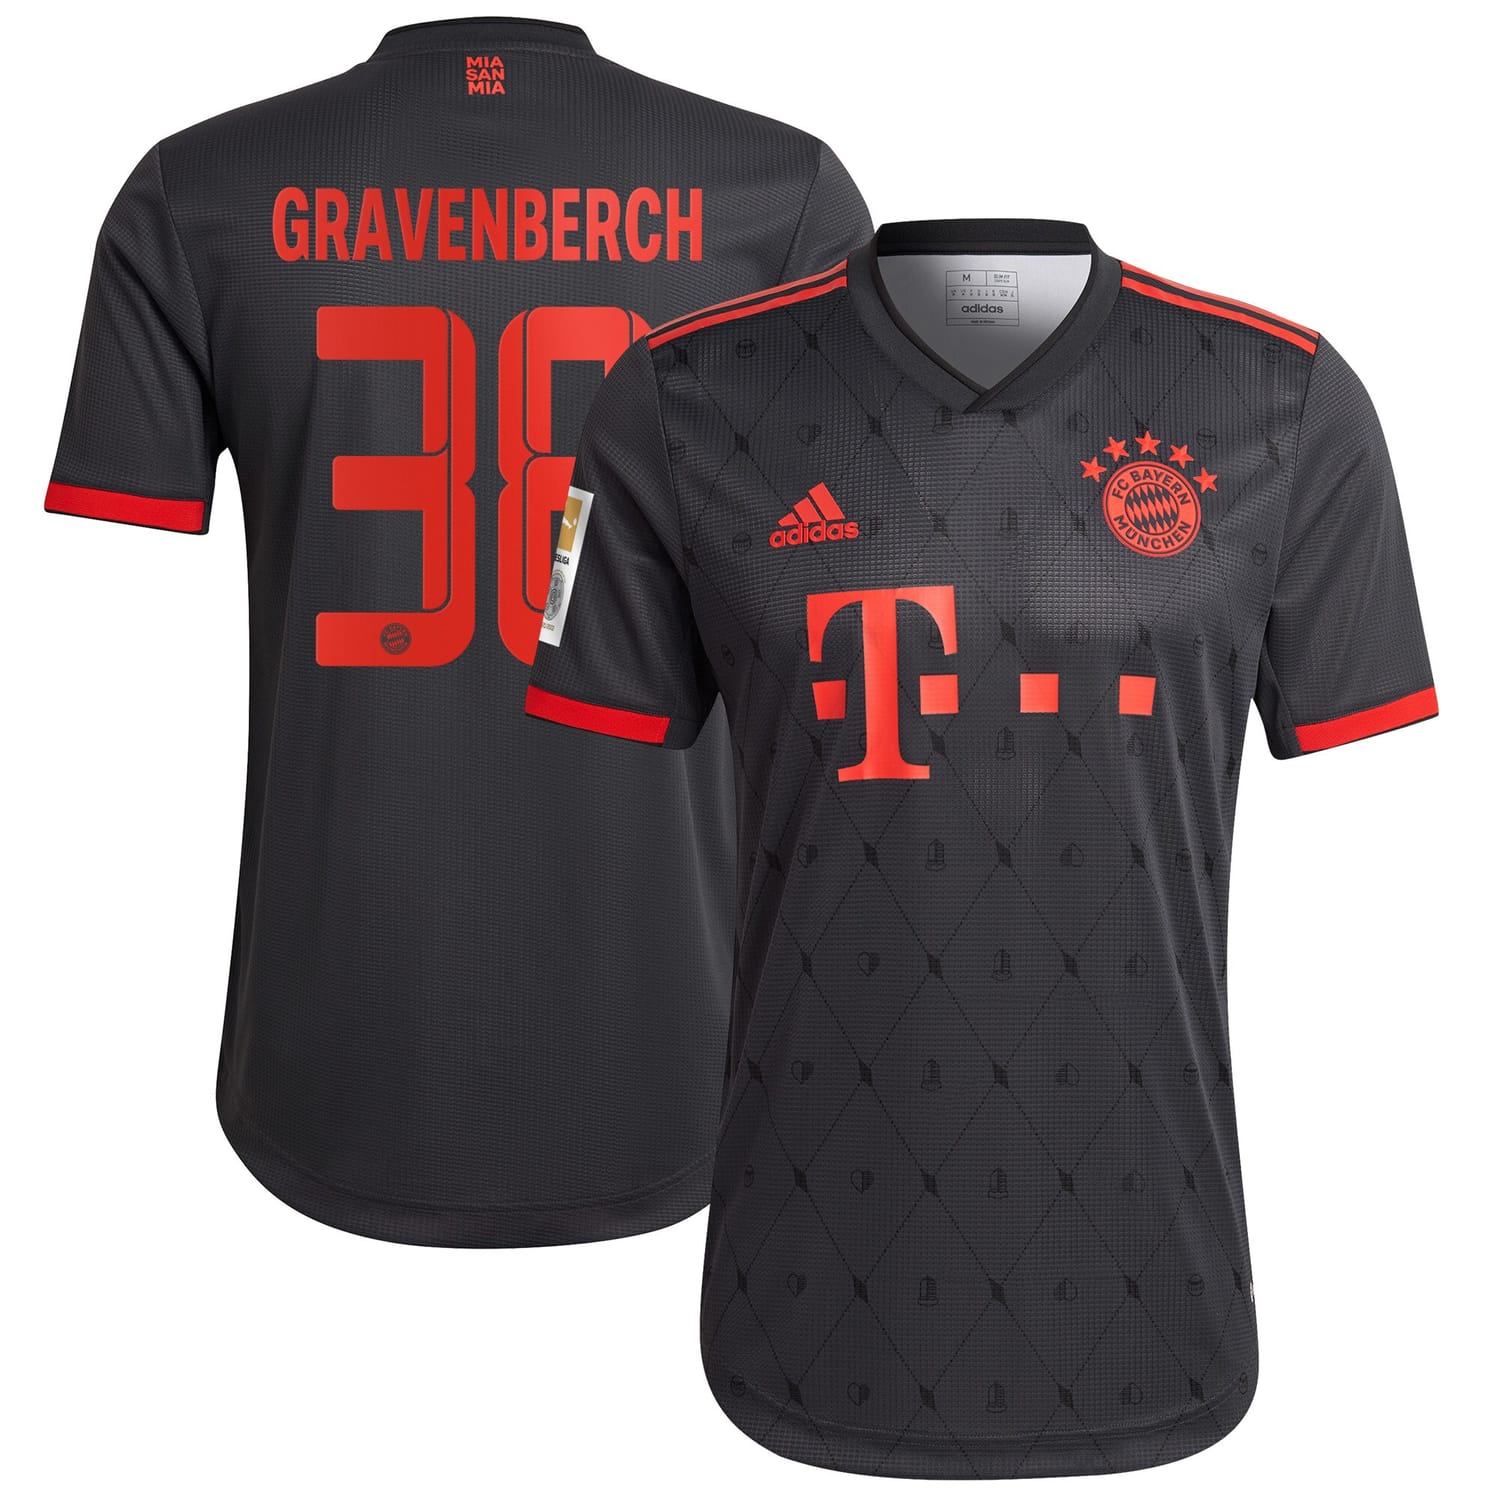 Bundesliga Bayern Munich Third Authentic Jersey Shirt Charcoal 2022-23 player Ryan Gravenberch printing for Men